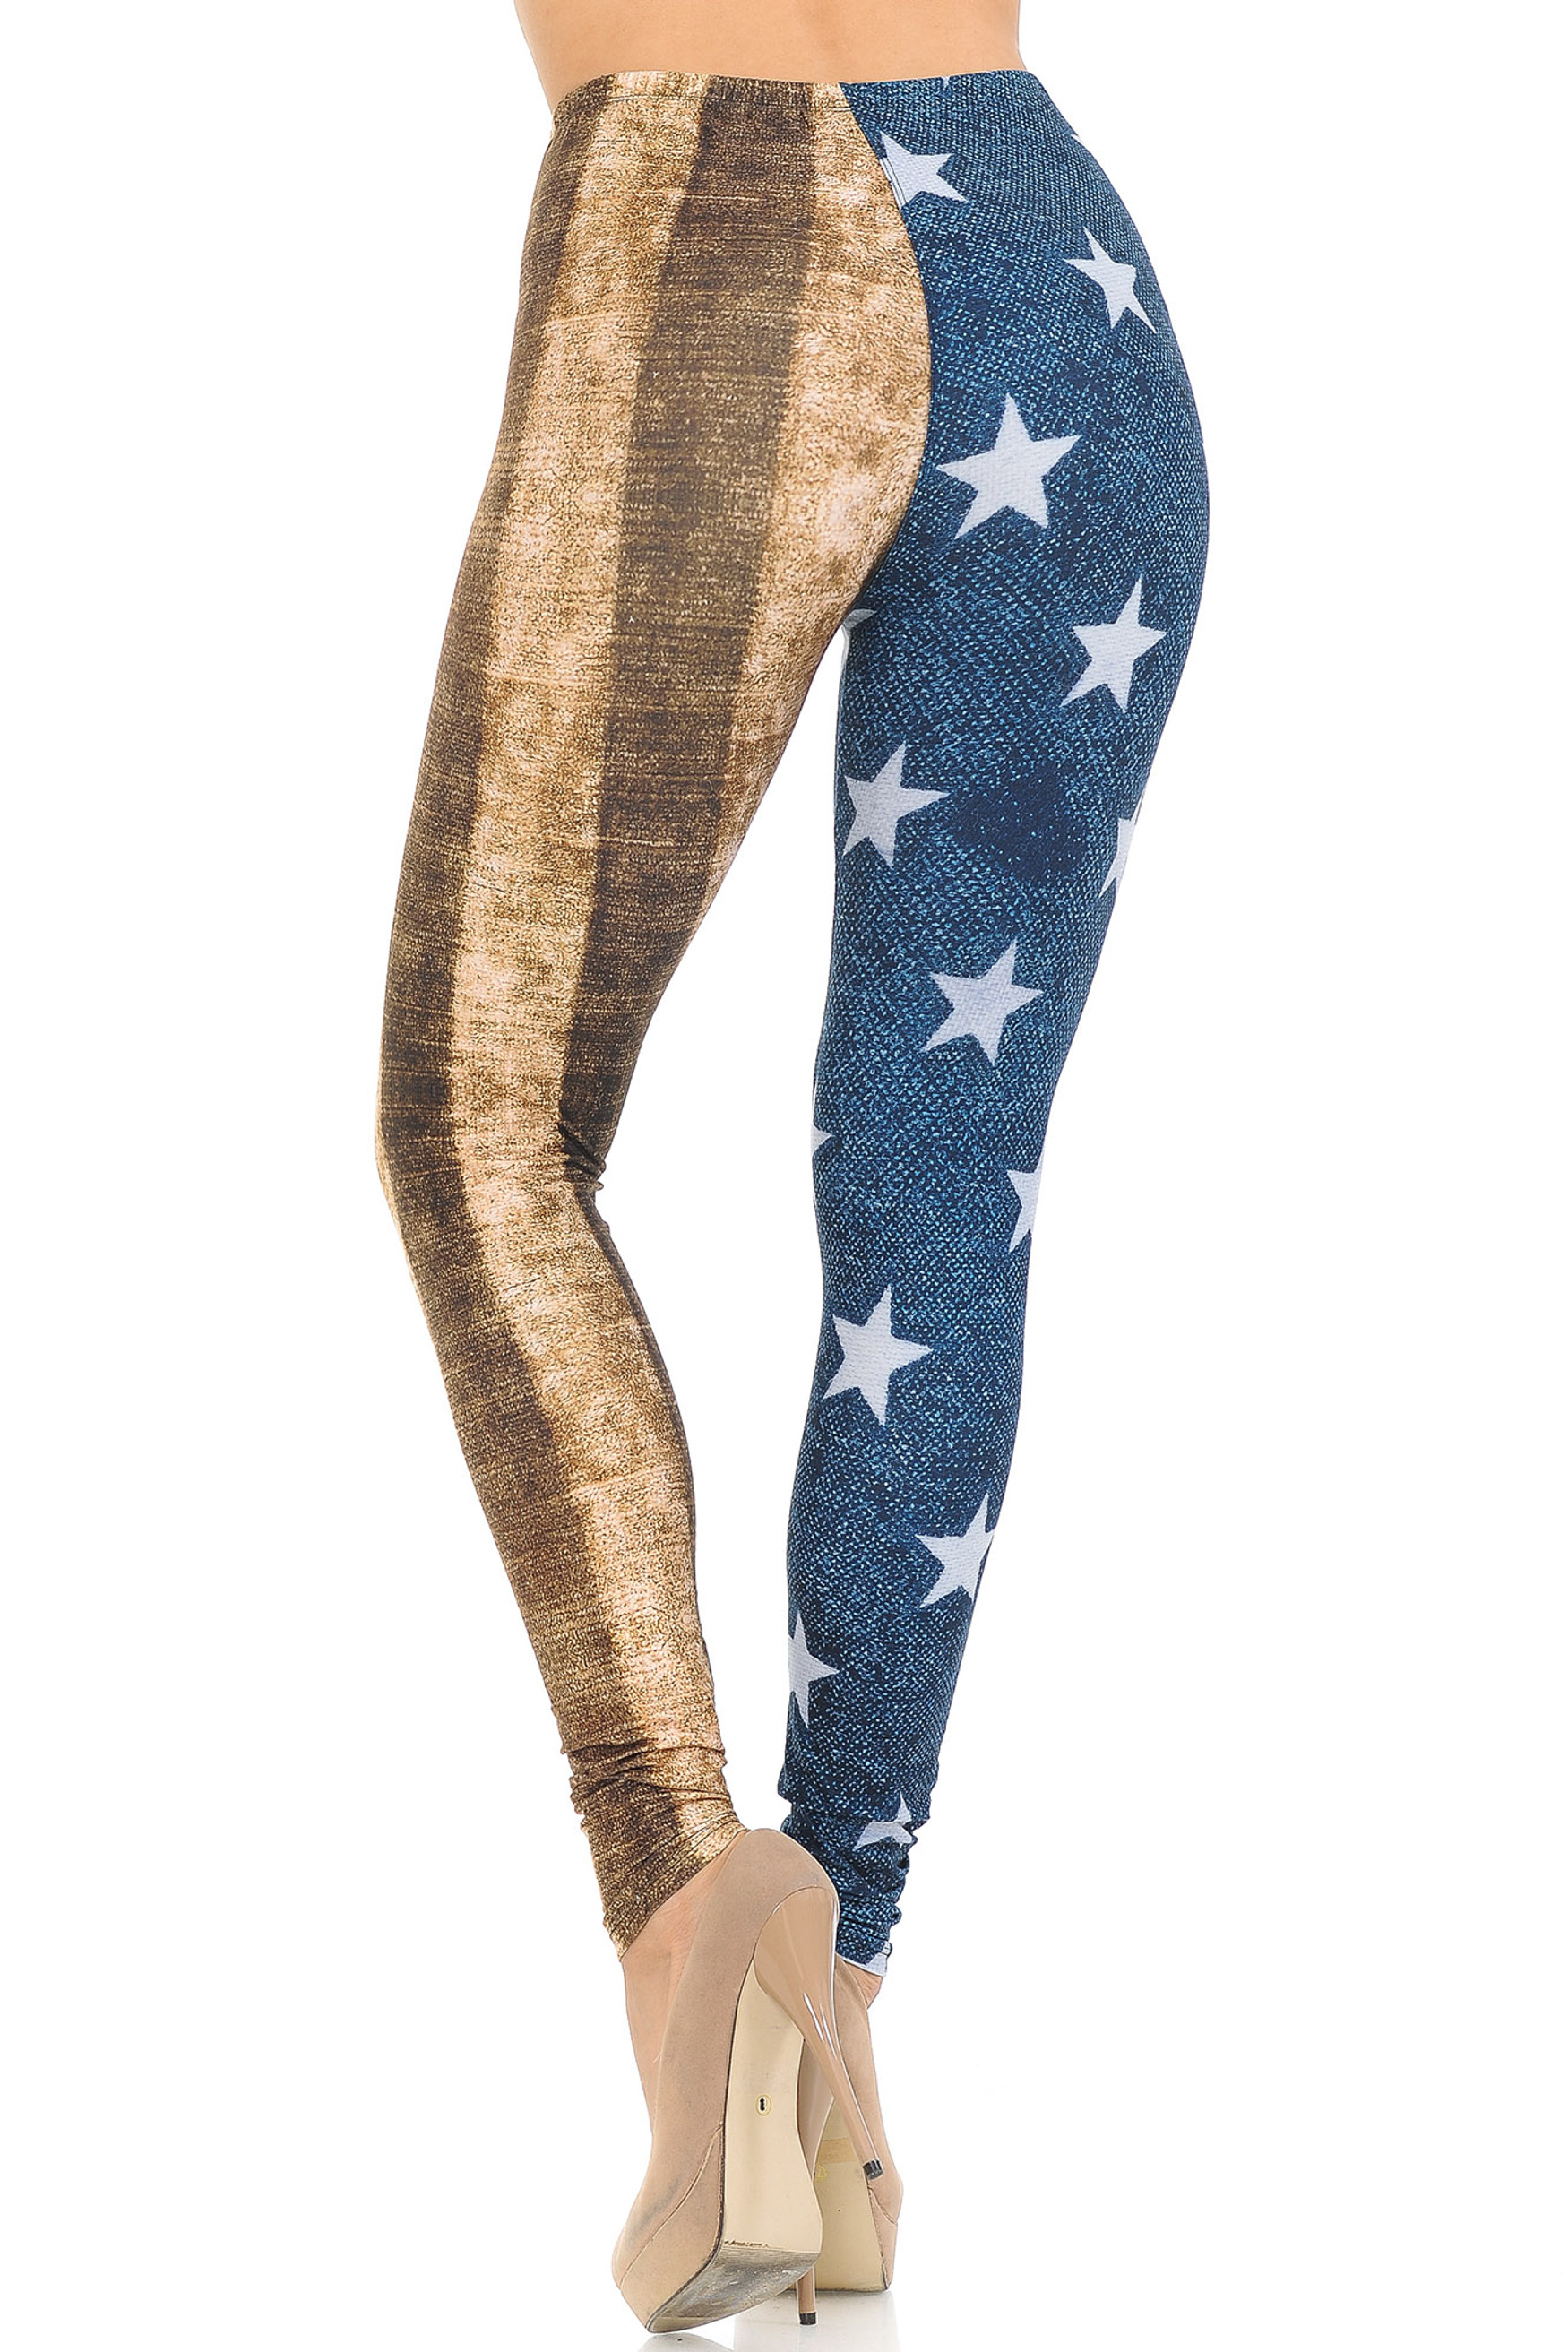 Creamy Soft Vintage USA Flag Leggings - USA Fashion™